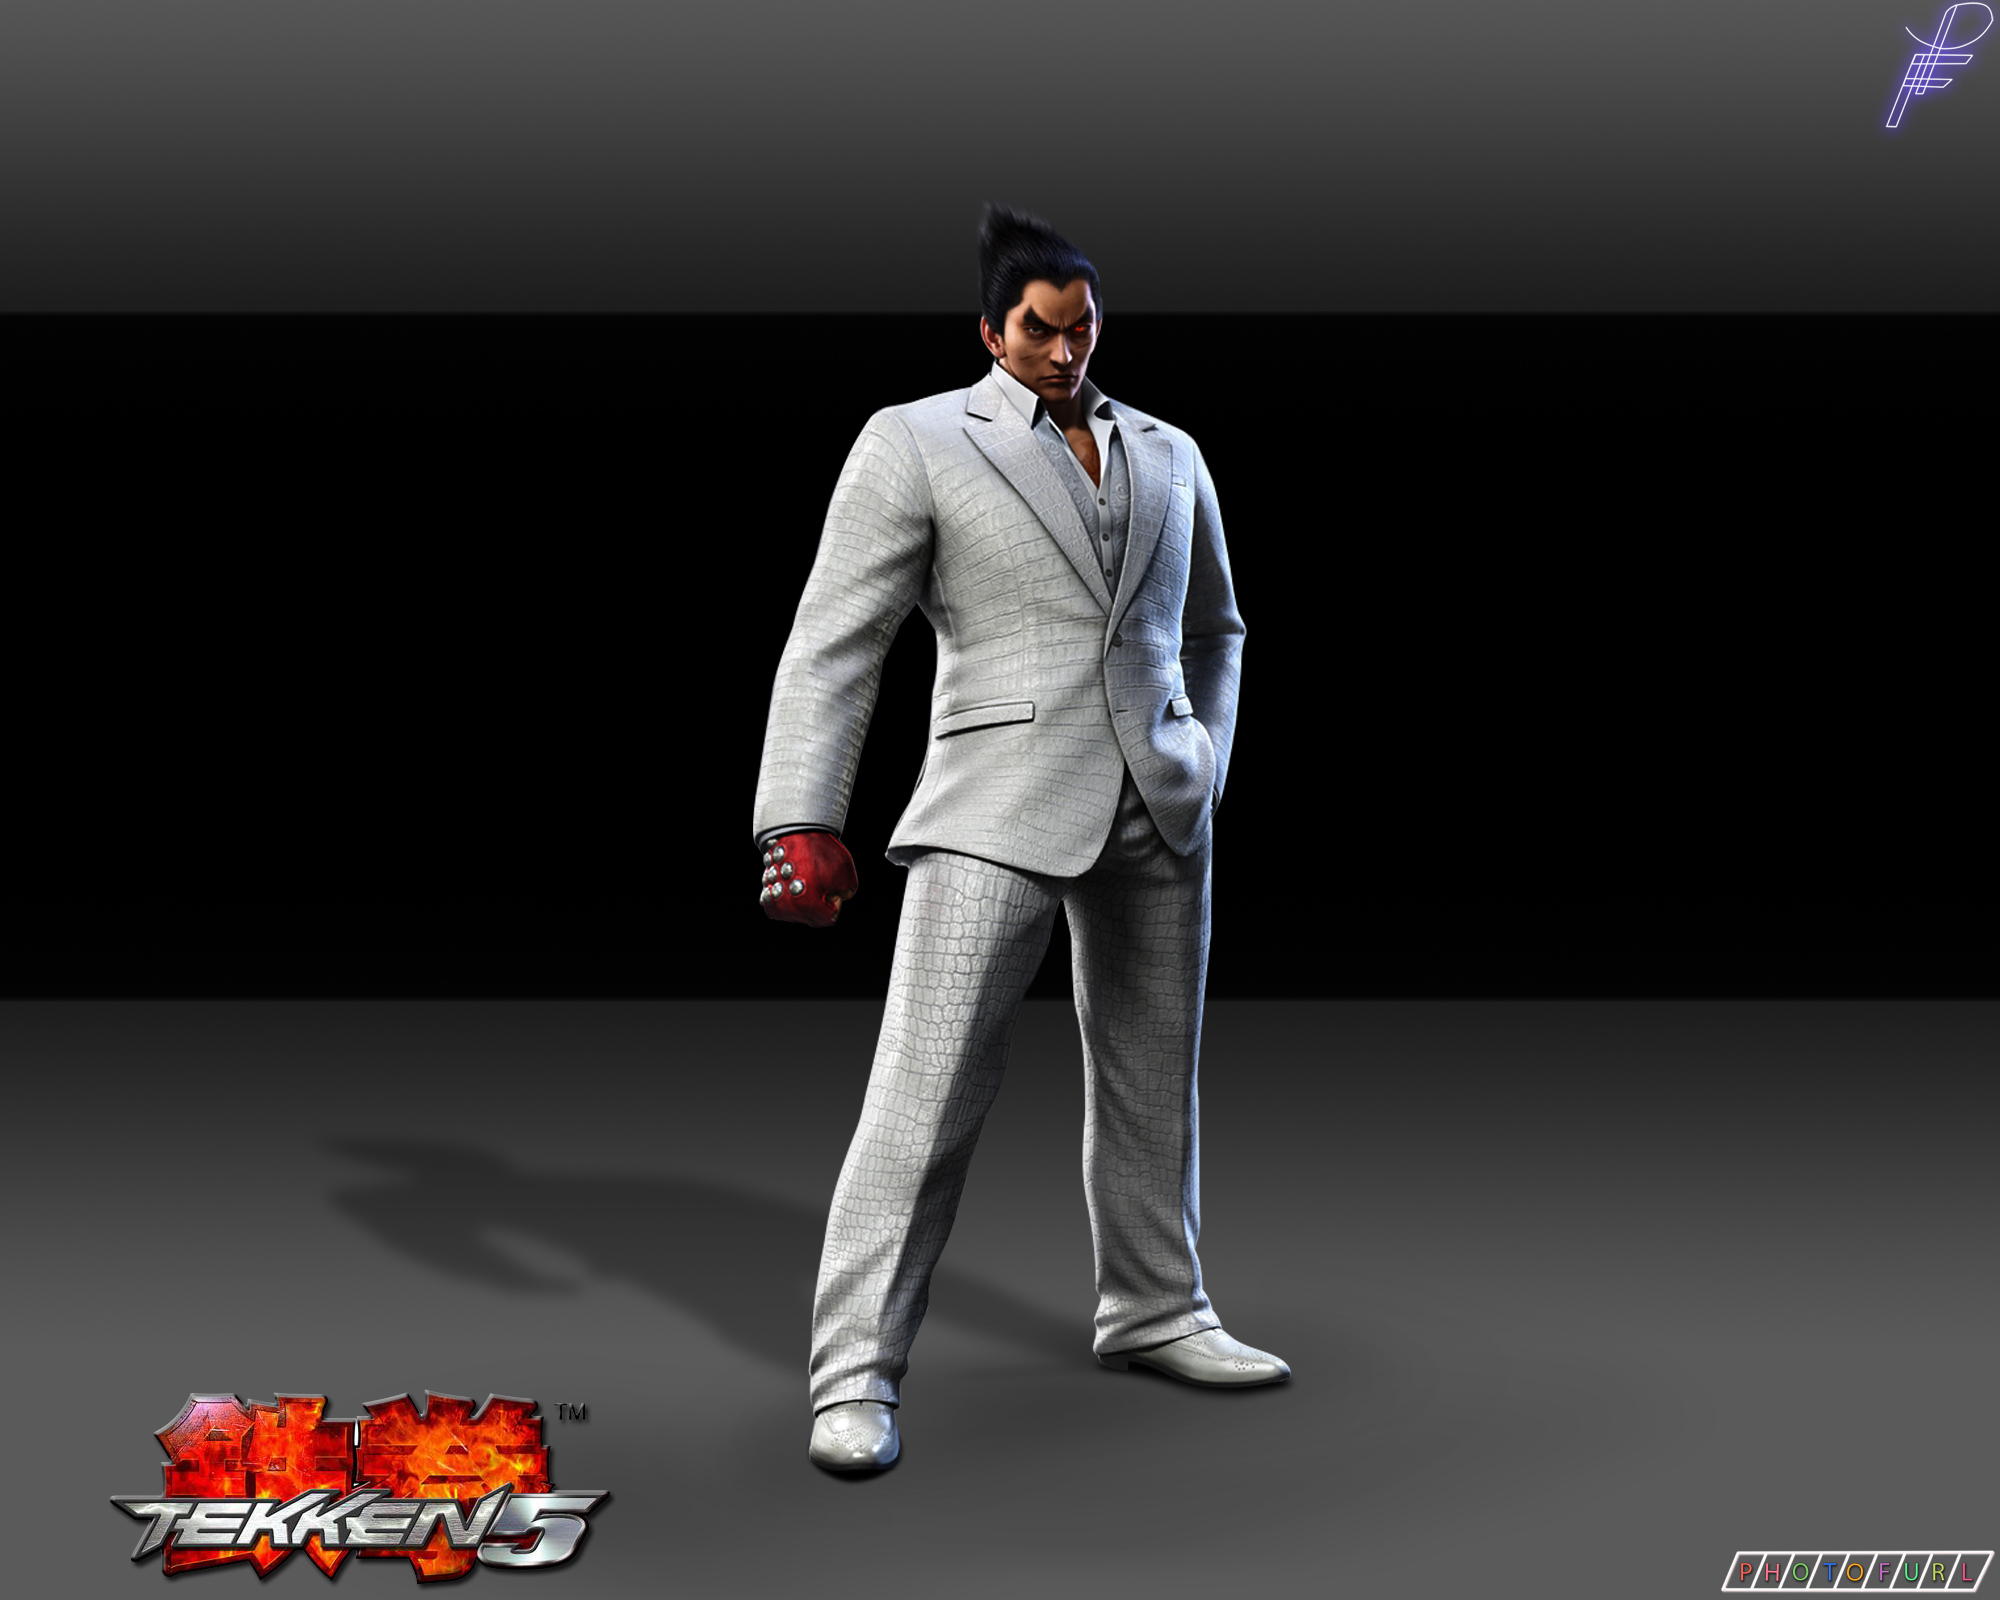 kazuya mishima wallpaper,action figure,suit,animation,formal wear,3d modeling